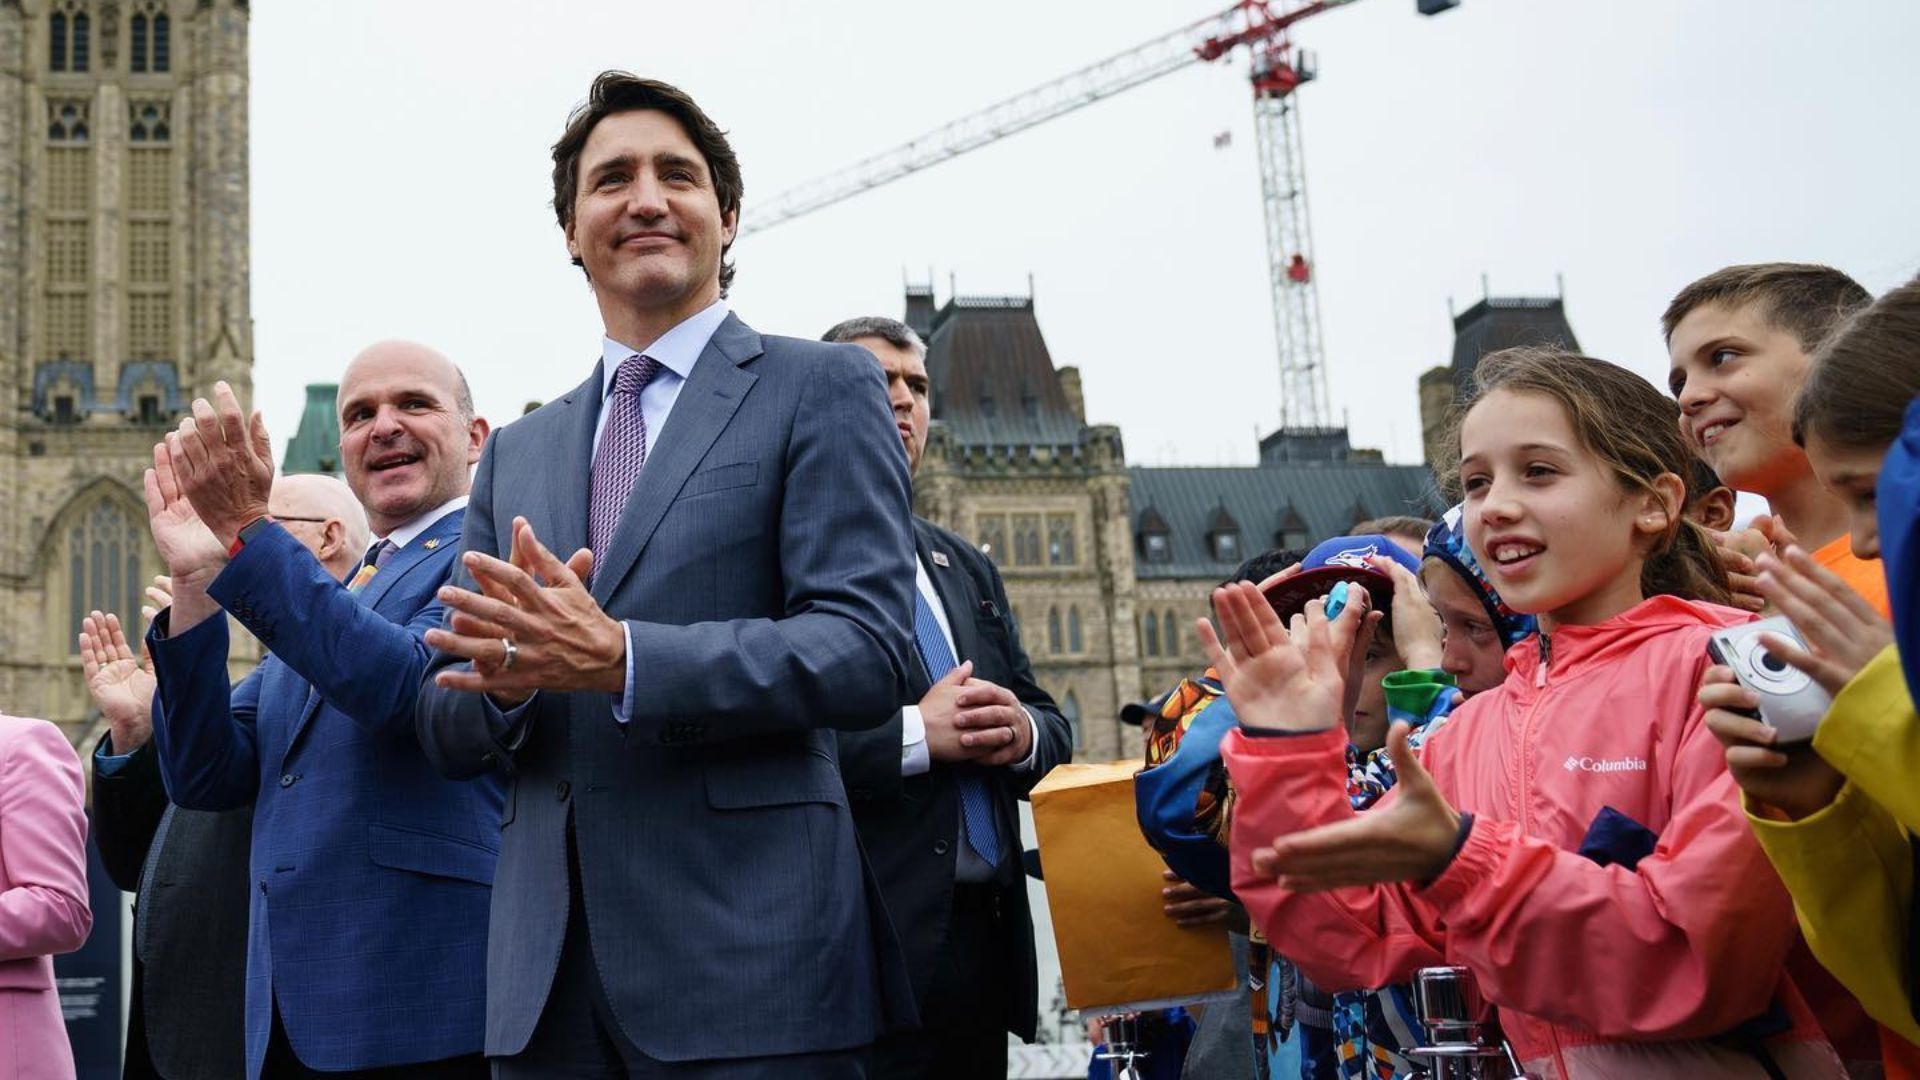 Best dressed leaders: Justin Trudeau